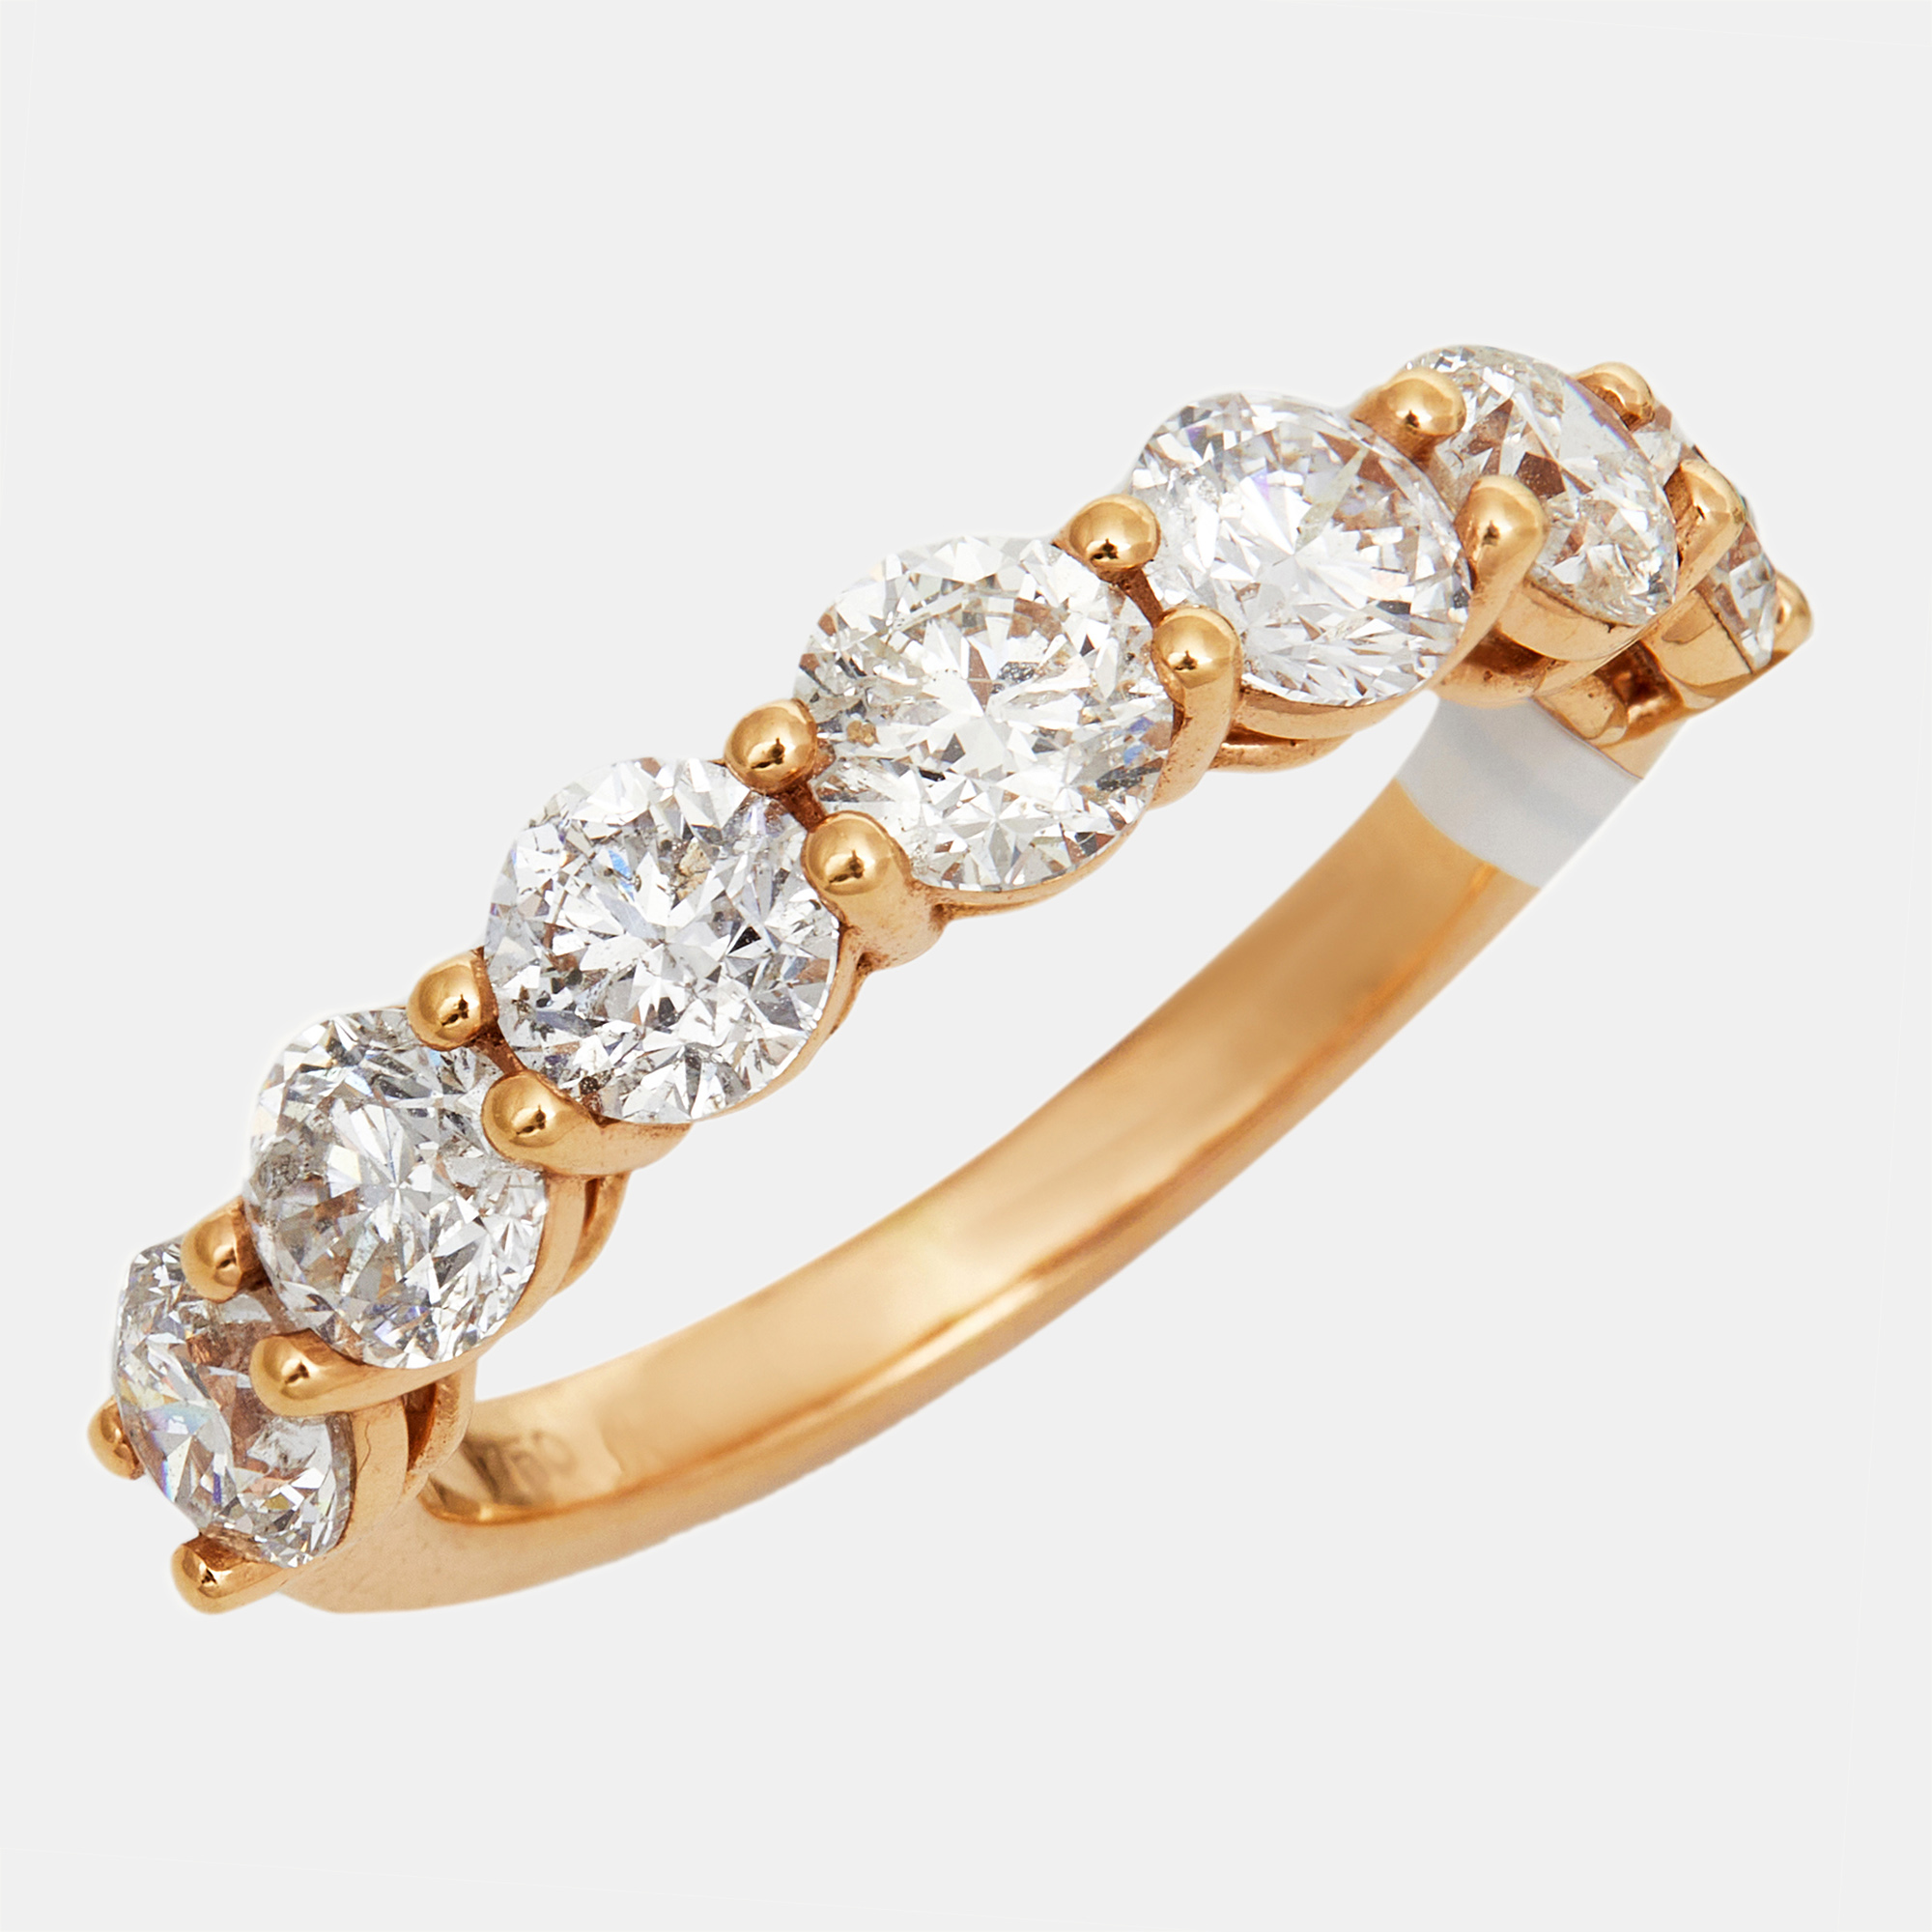 The diamond edit 18k rose gold ring eu 54